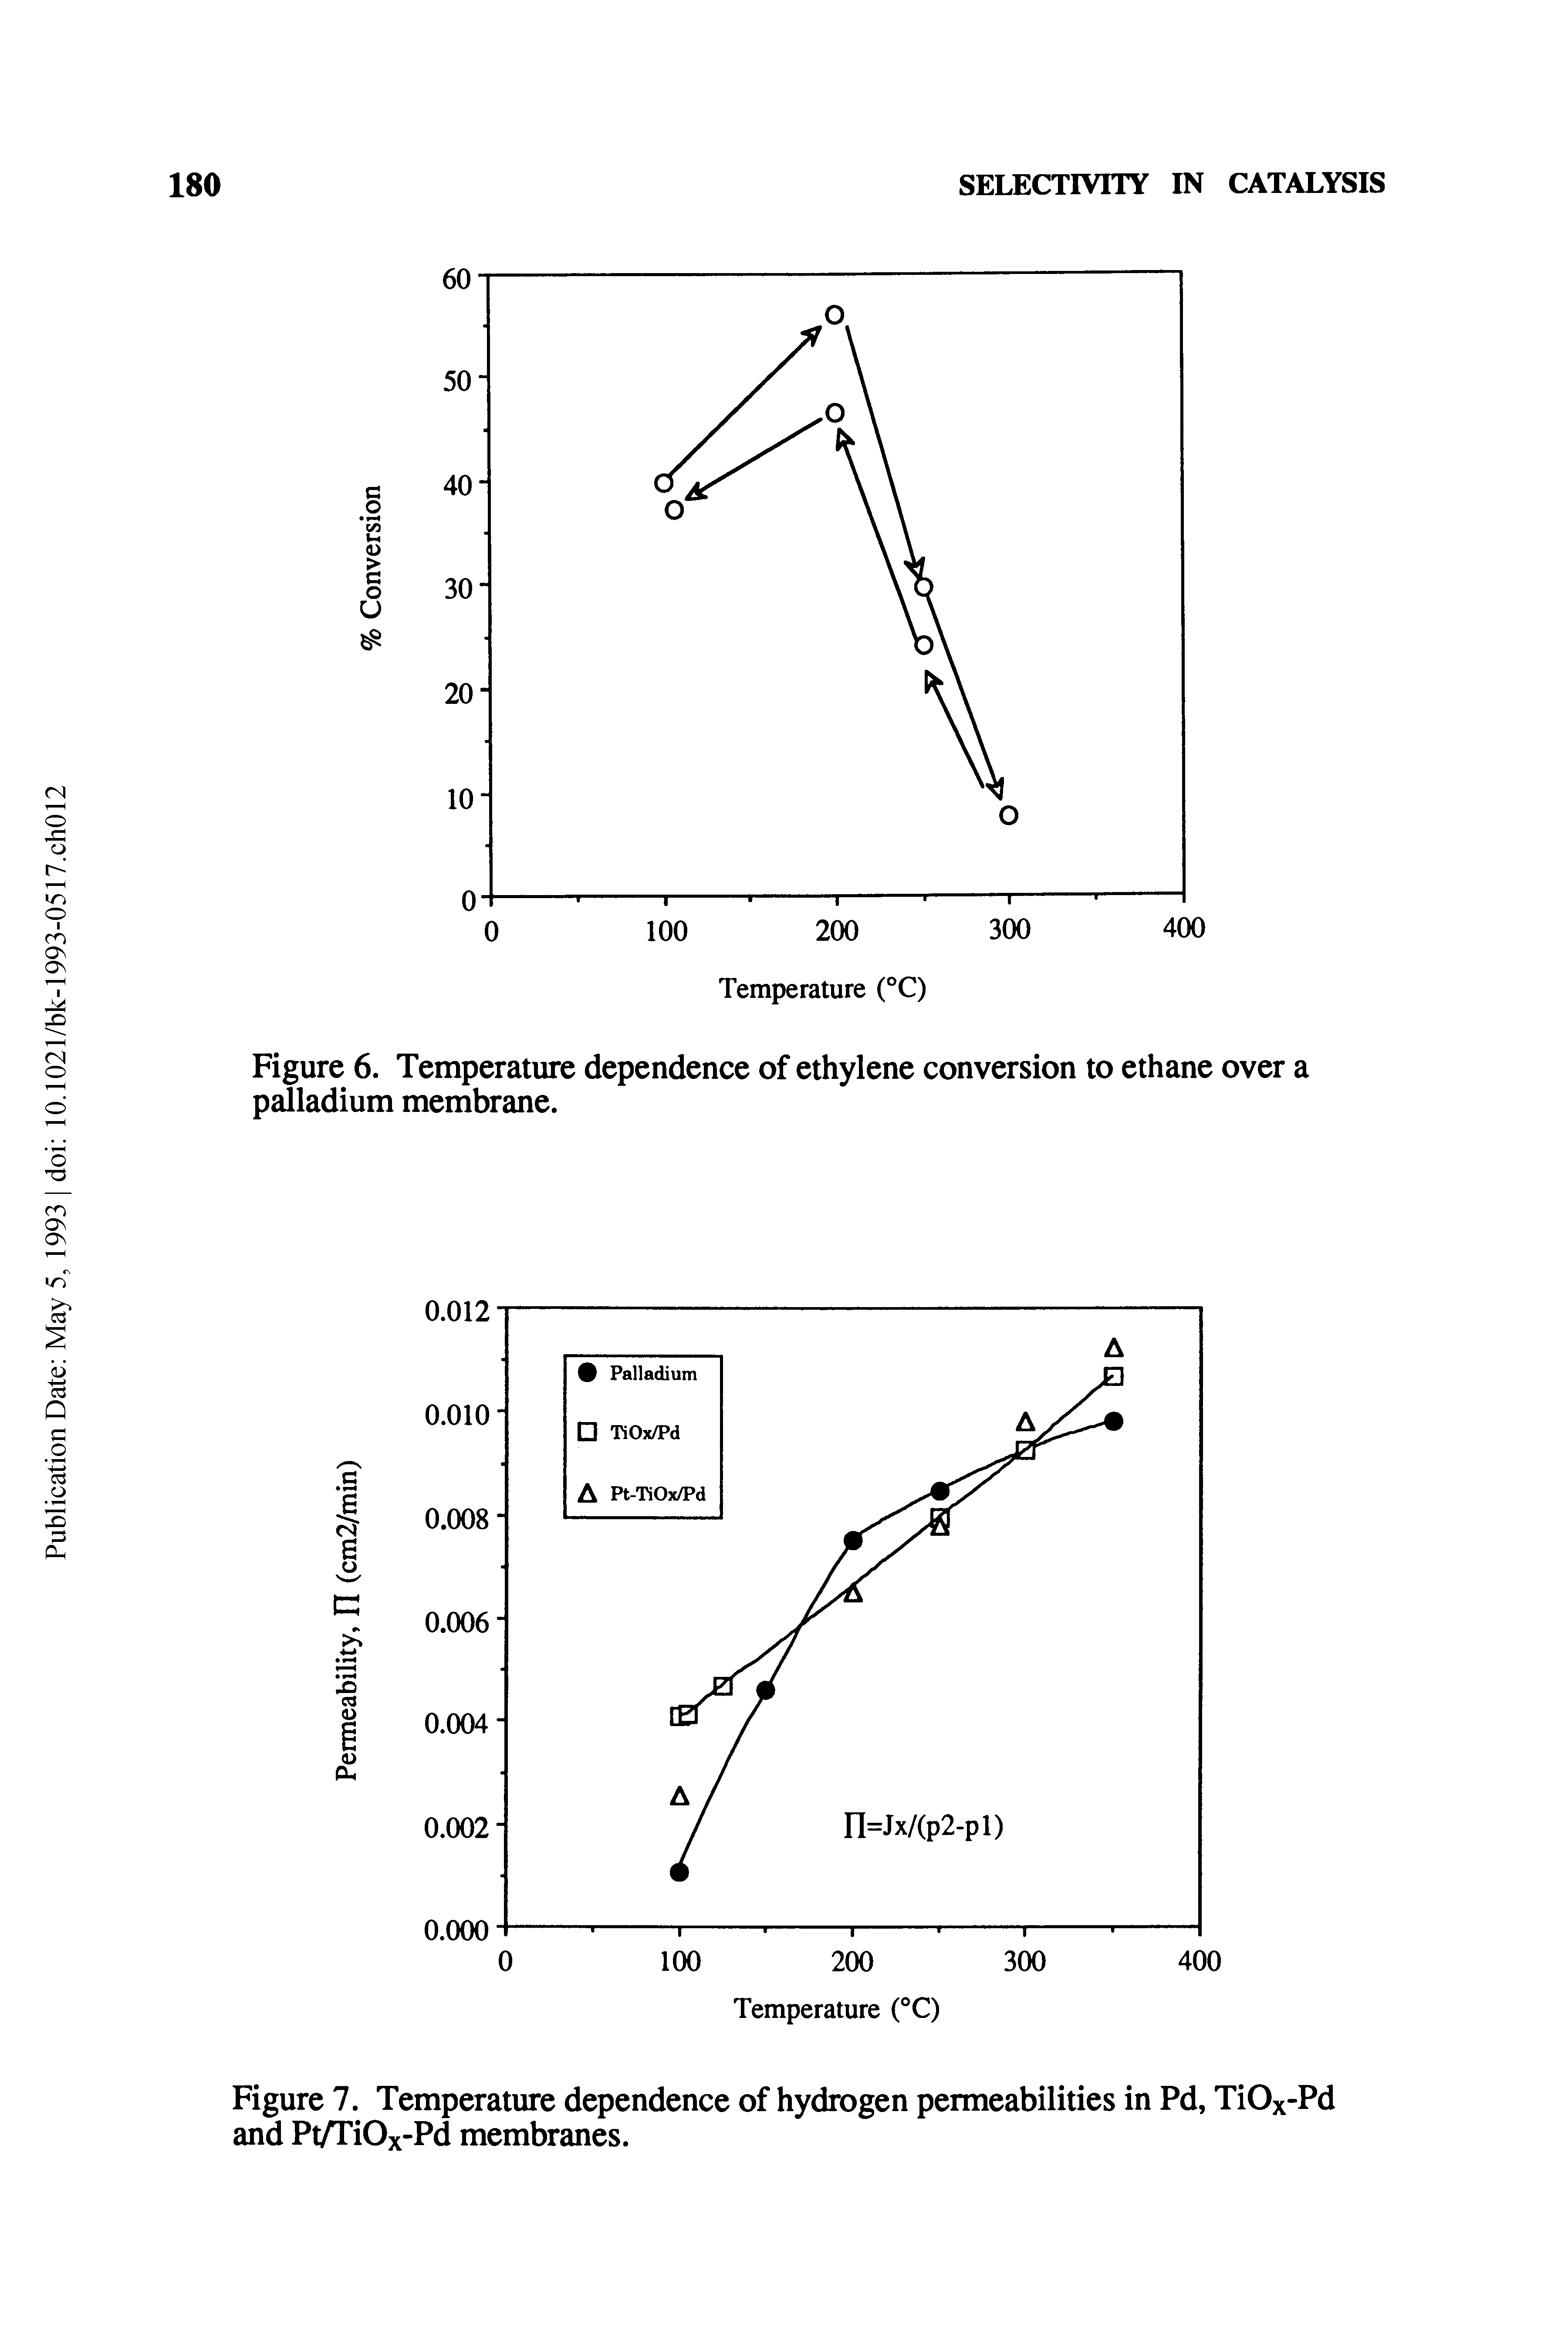 Figure 6. Temperature dependence of ethylene conversion to ethane over a palladium membrane.